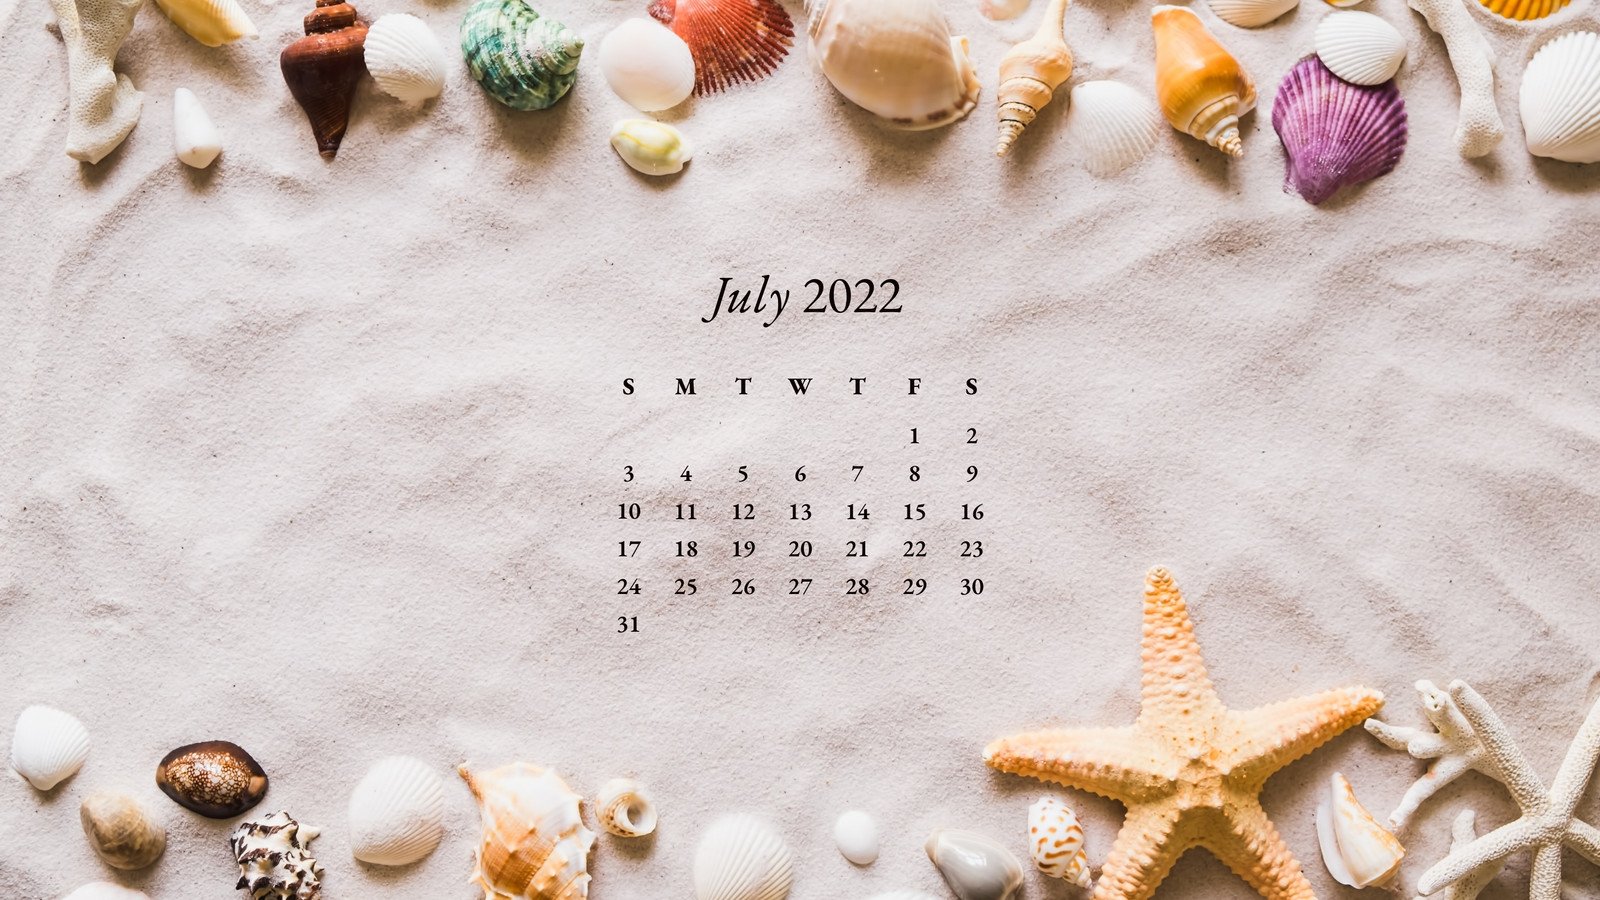 june 2022 calendar background